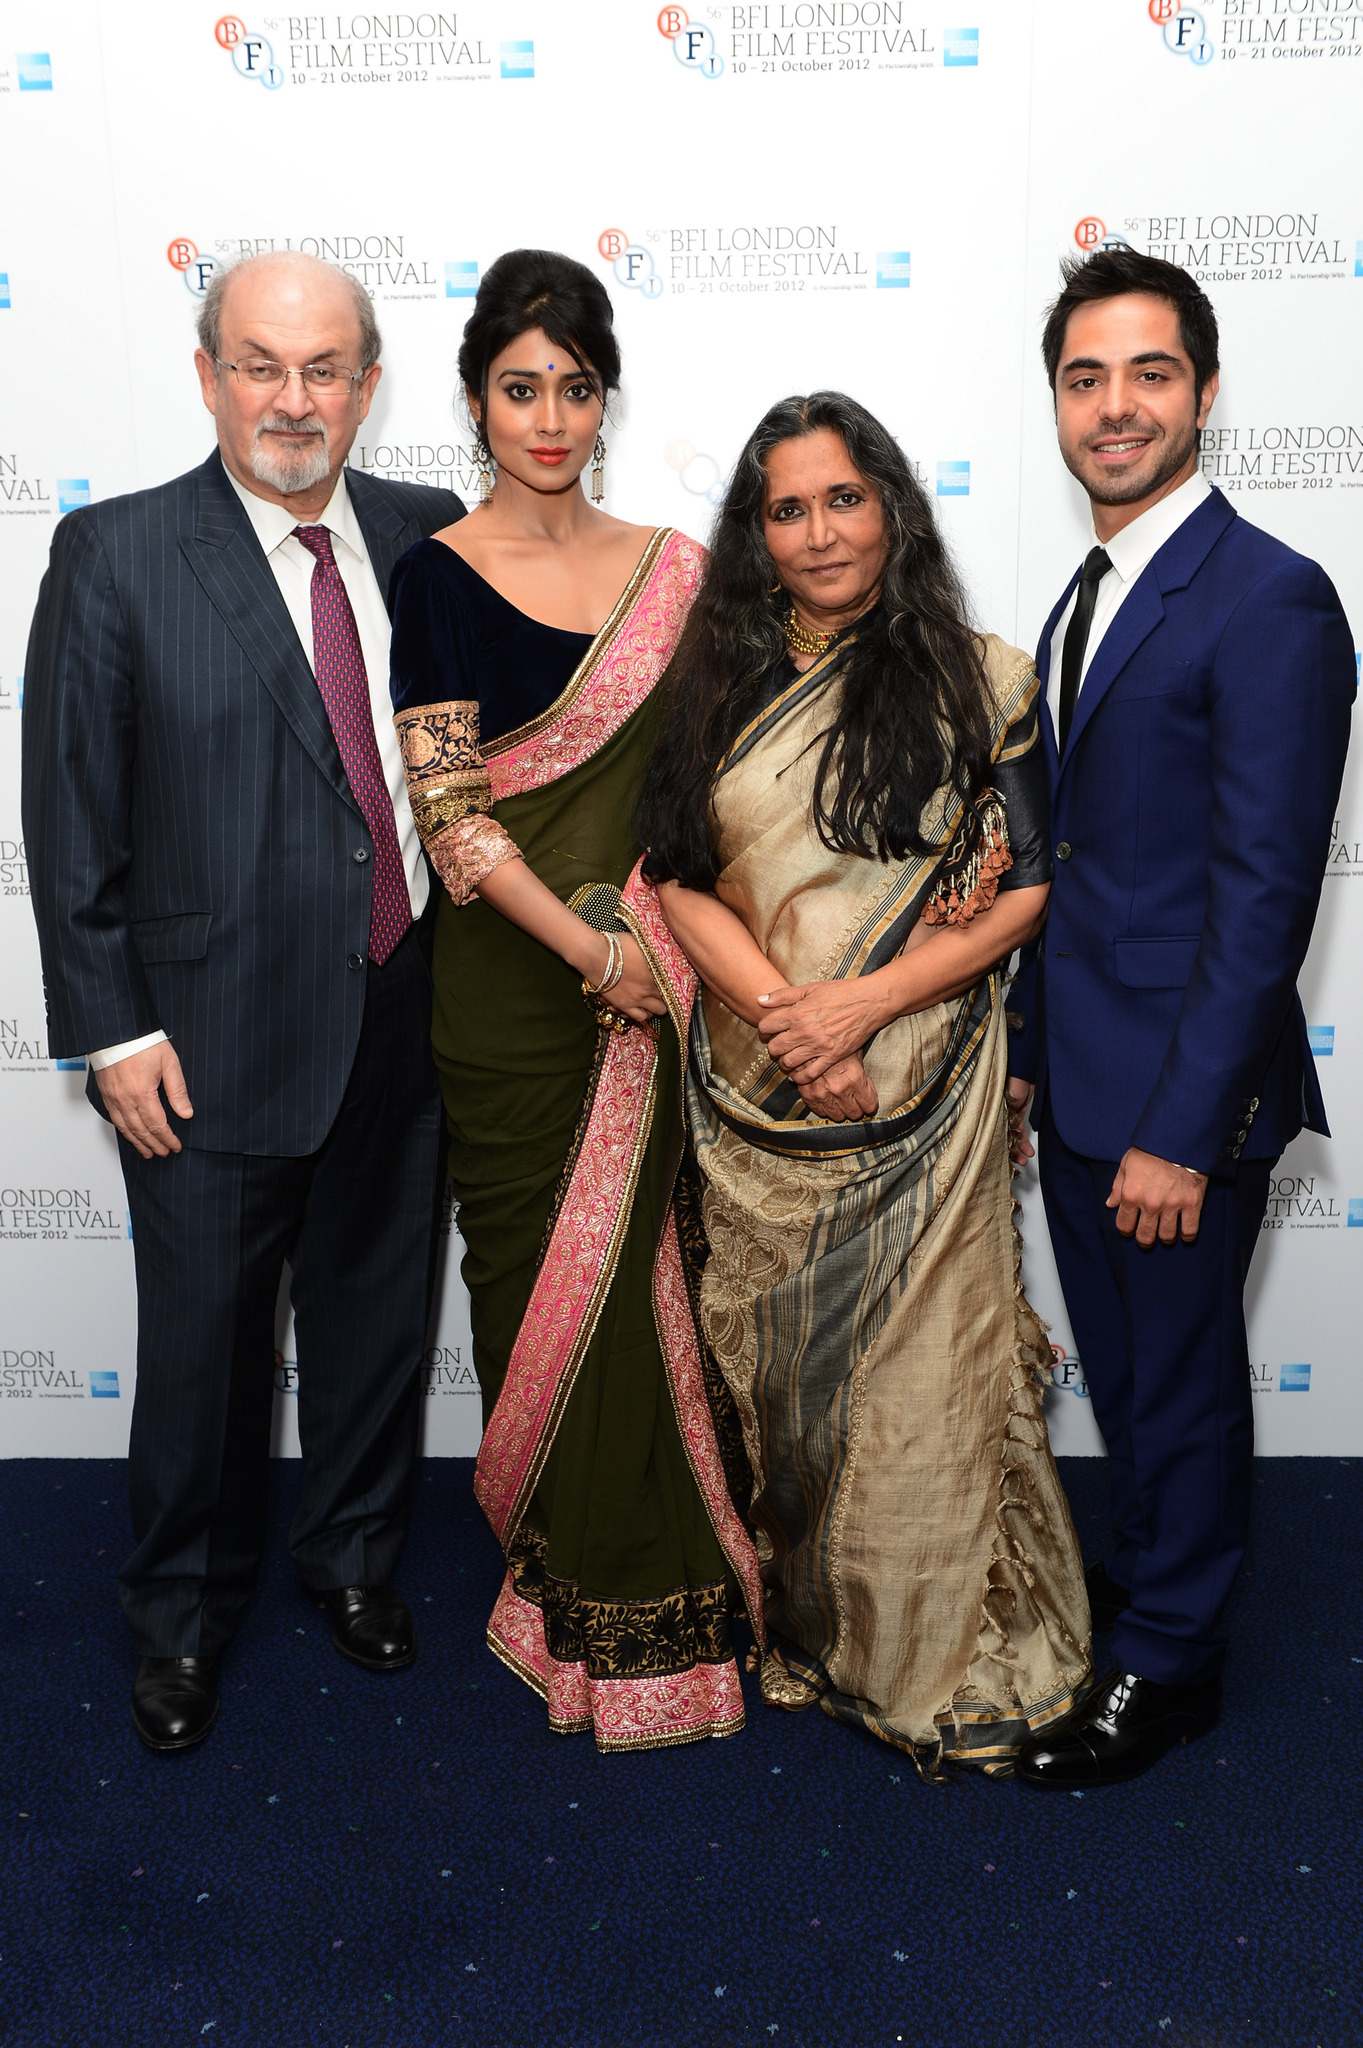 Deepa Mehta, Salman Rushdie, Shriya Saran and Satya Bhabha at event of Midnight's Children (2012)